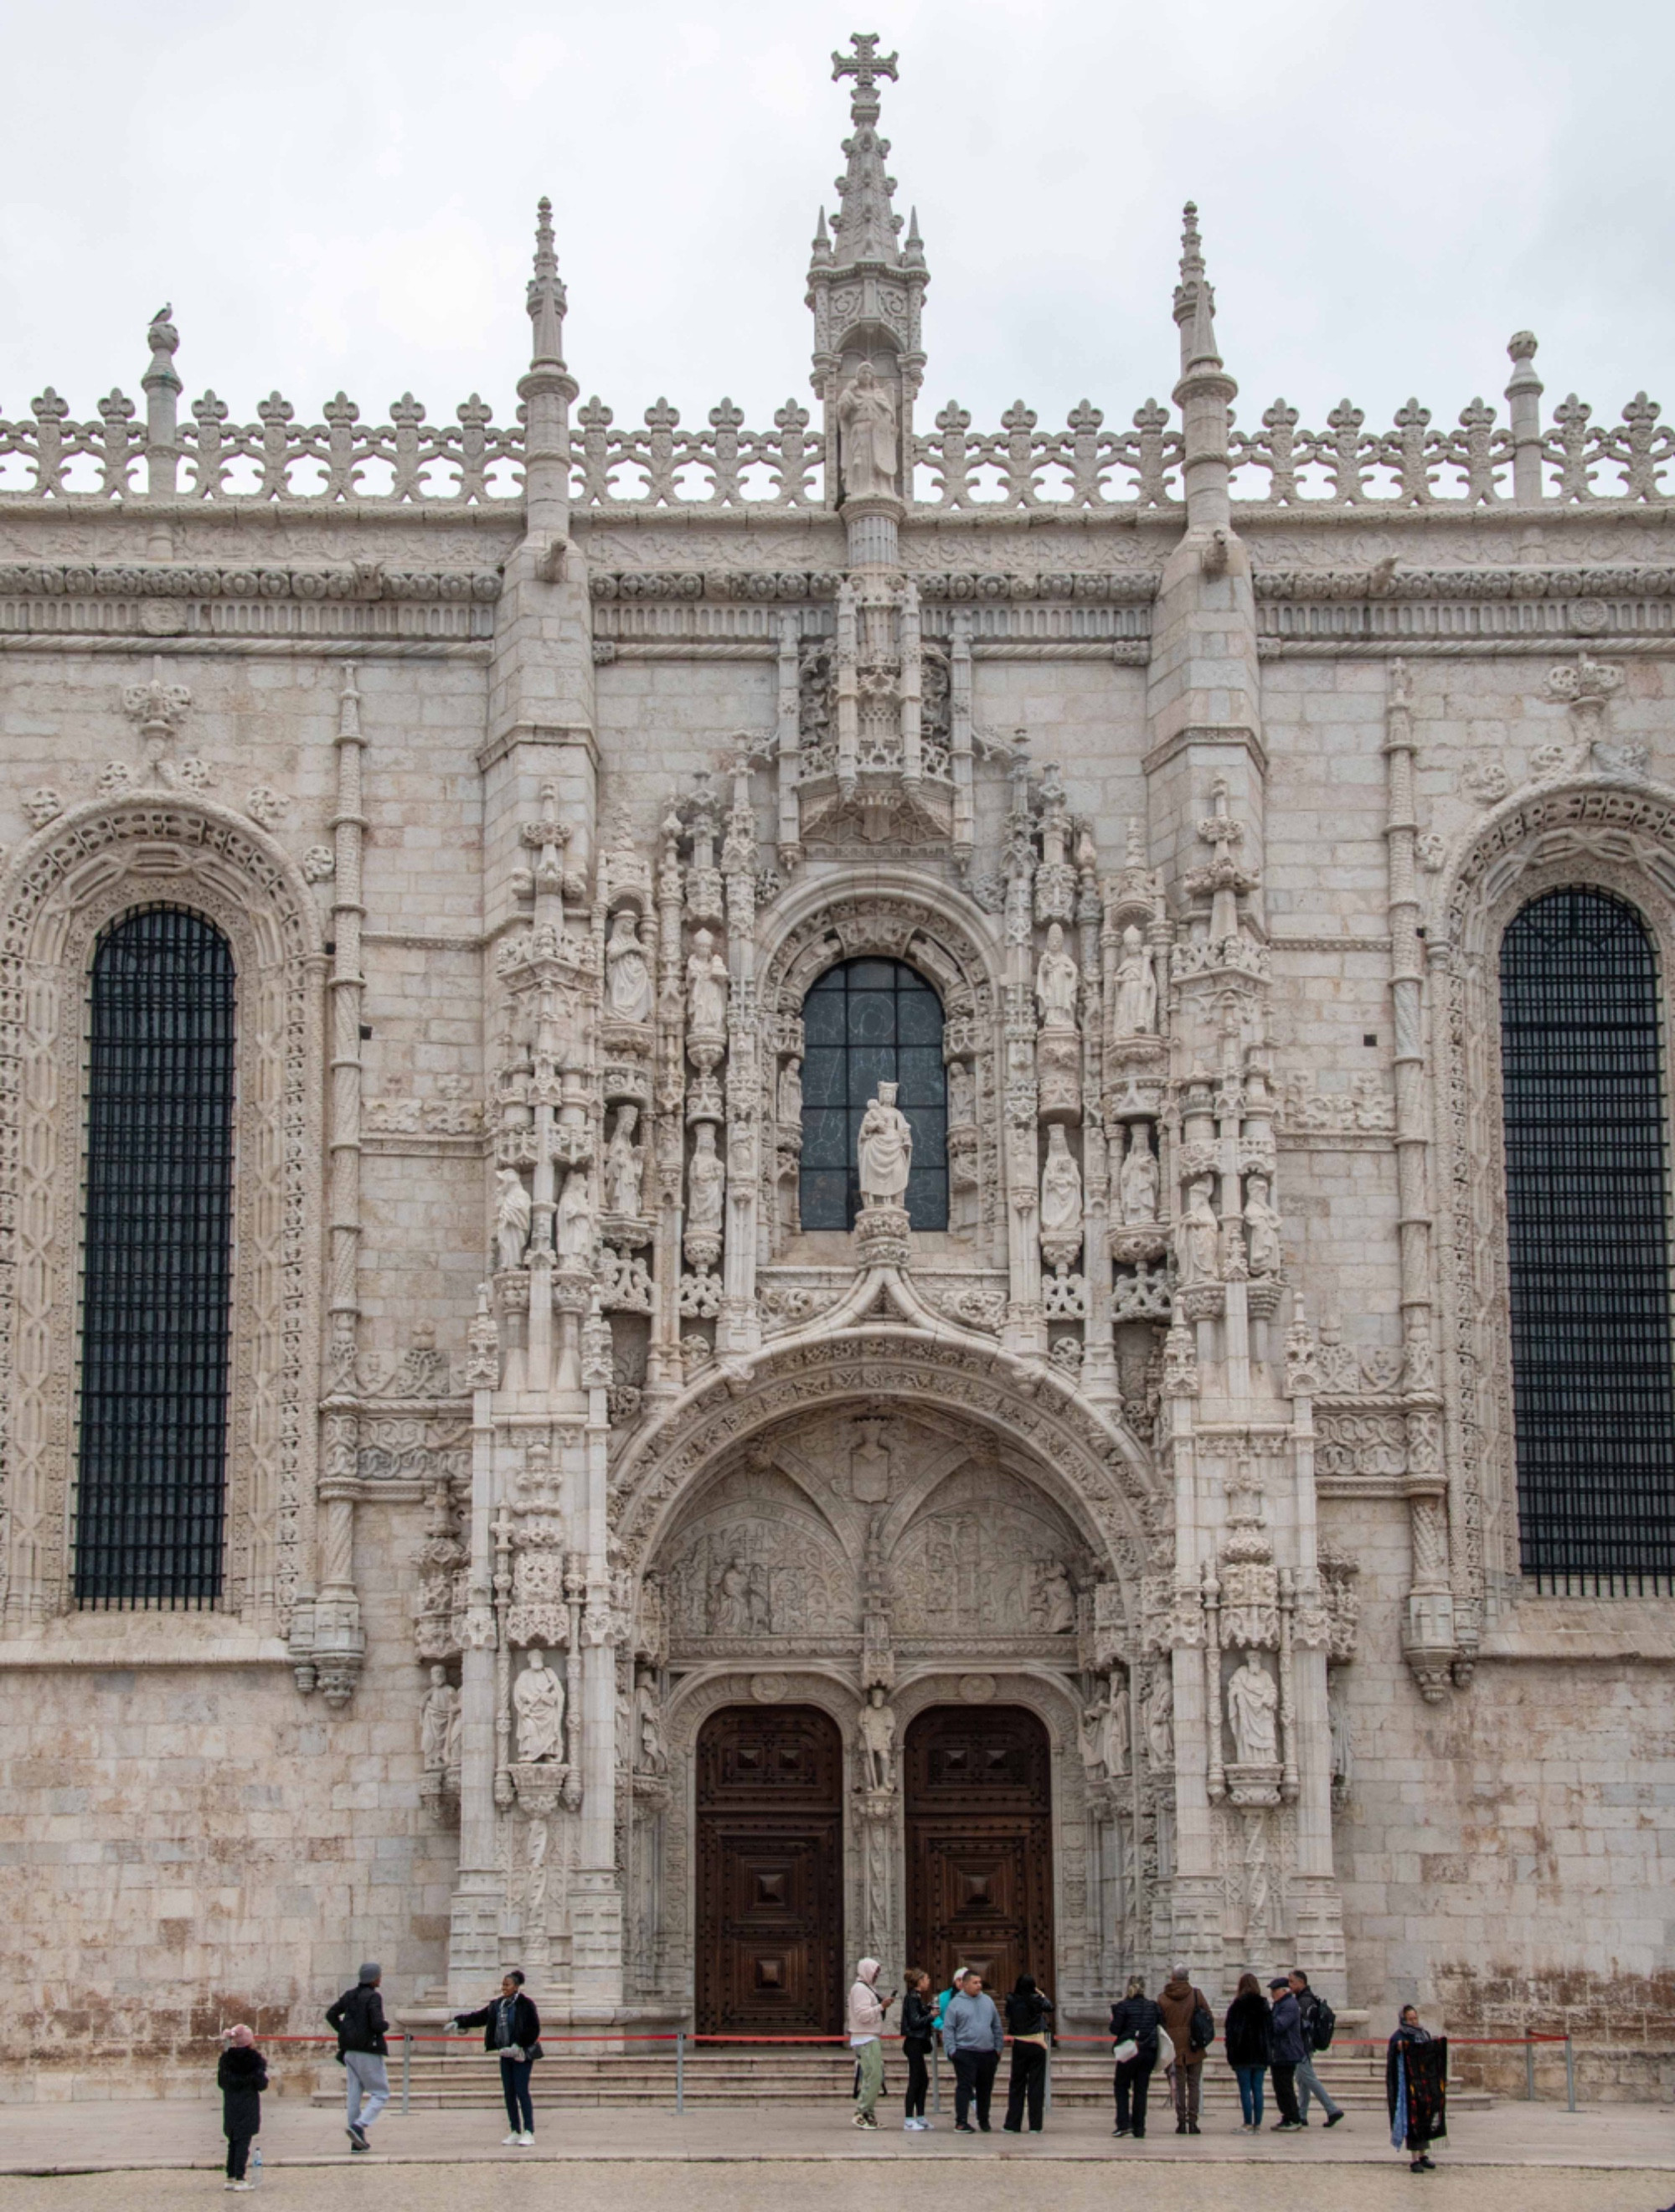 Church of St. María of Belém<br/>
